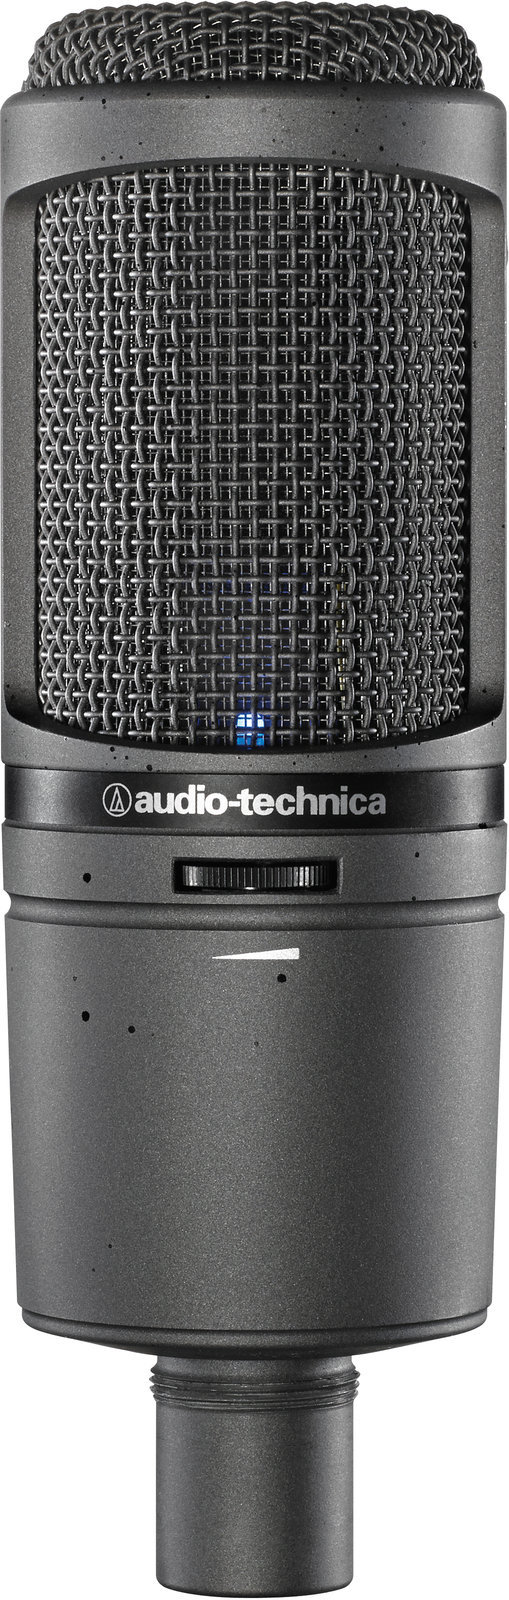 USB микрофон Audio-Technica AT2020USBi